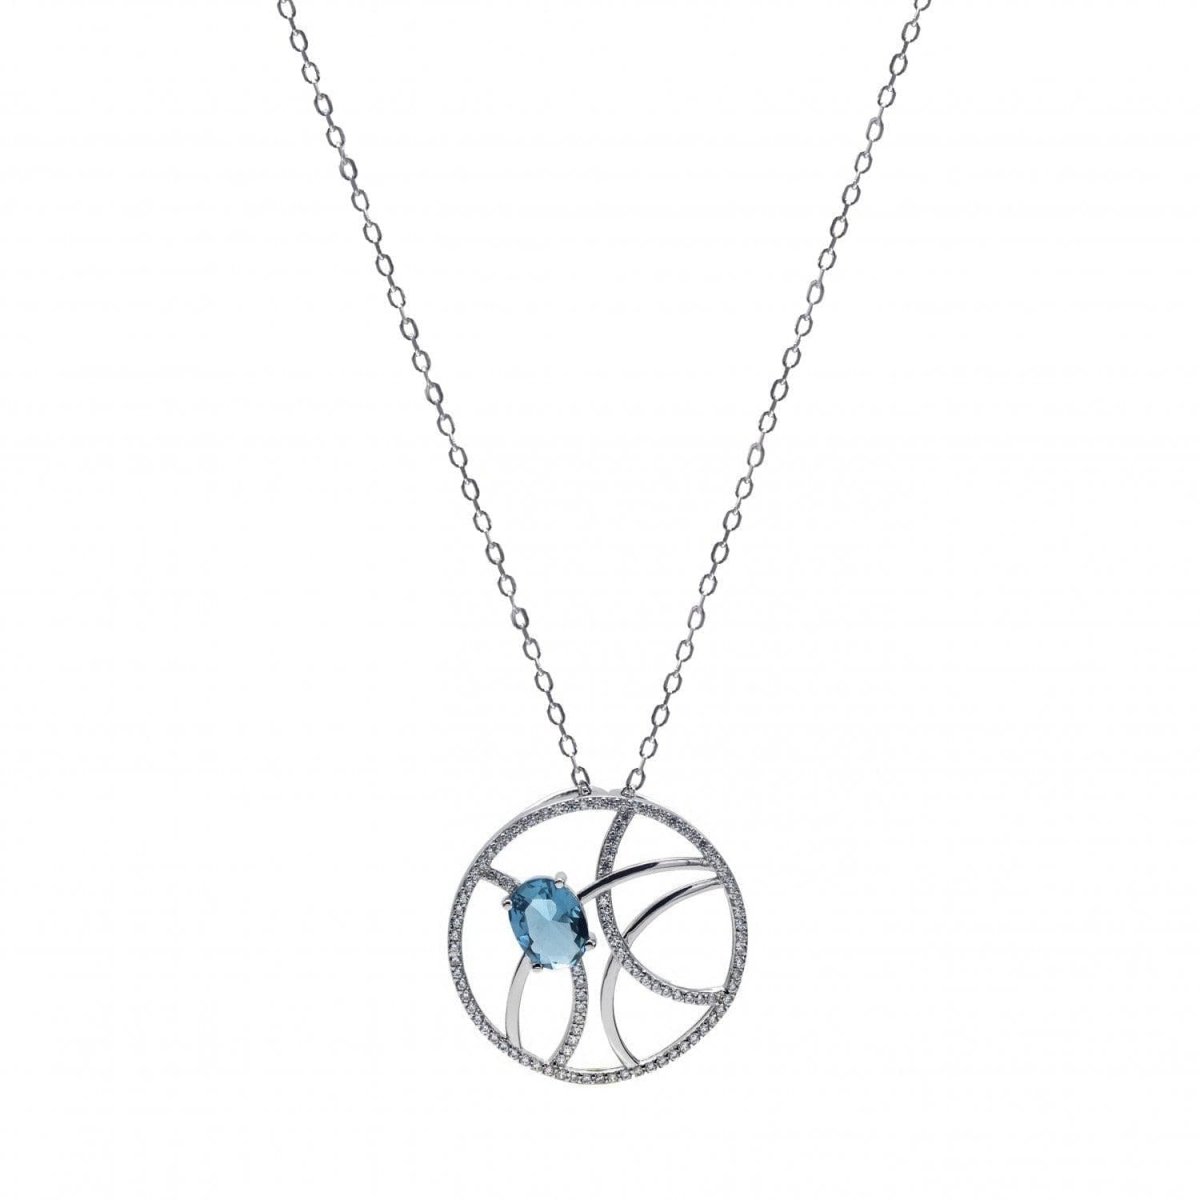 Necklace - Large silver pendants with circular aquamarine design